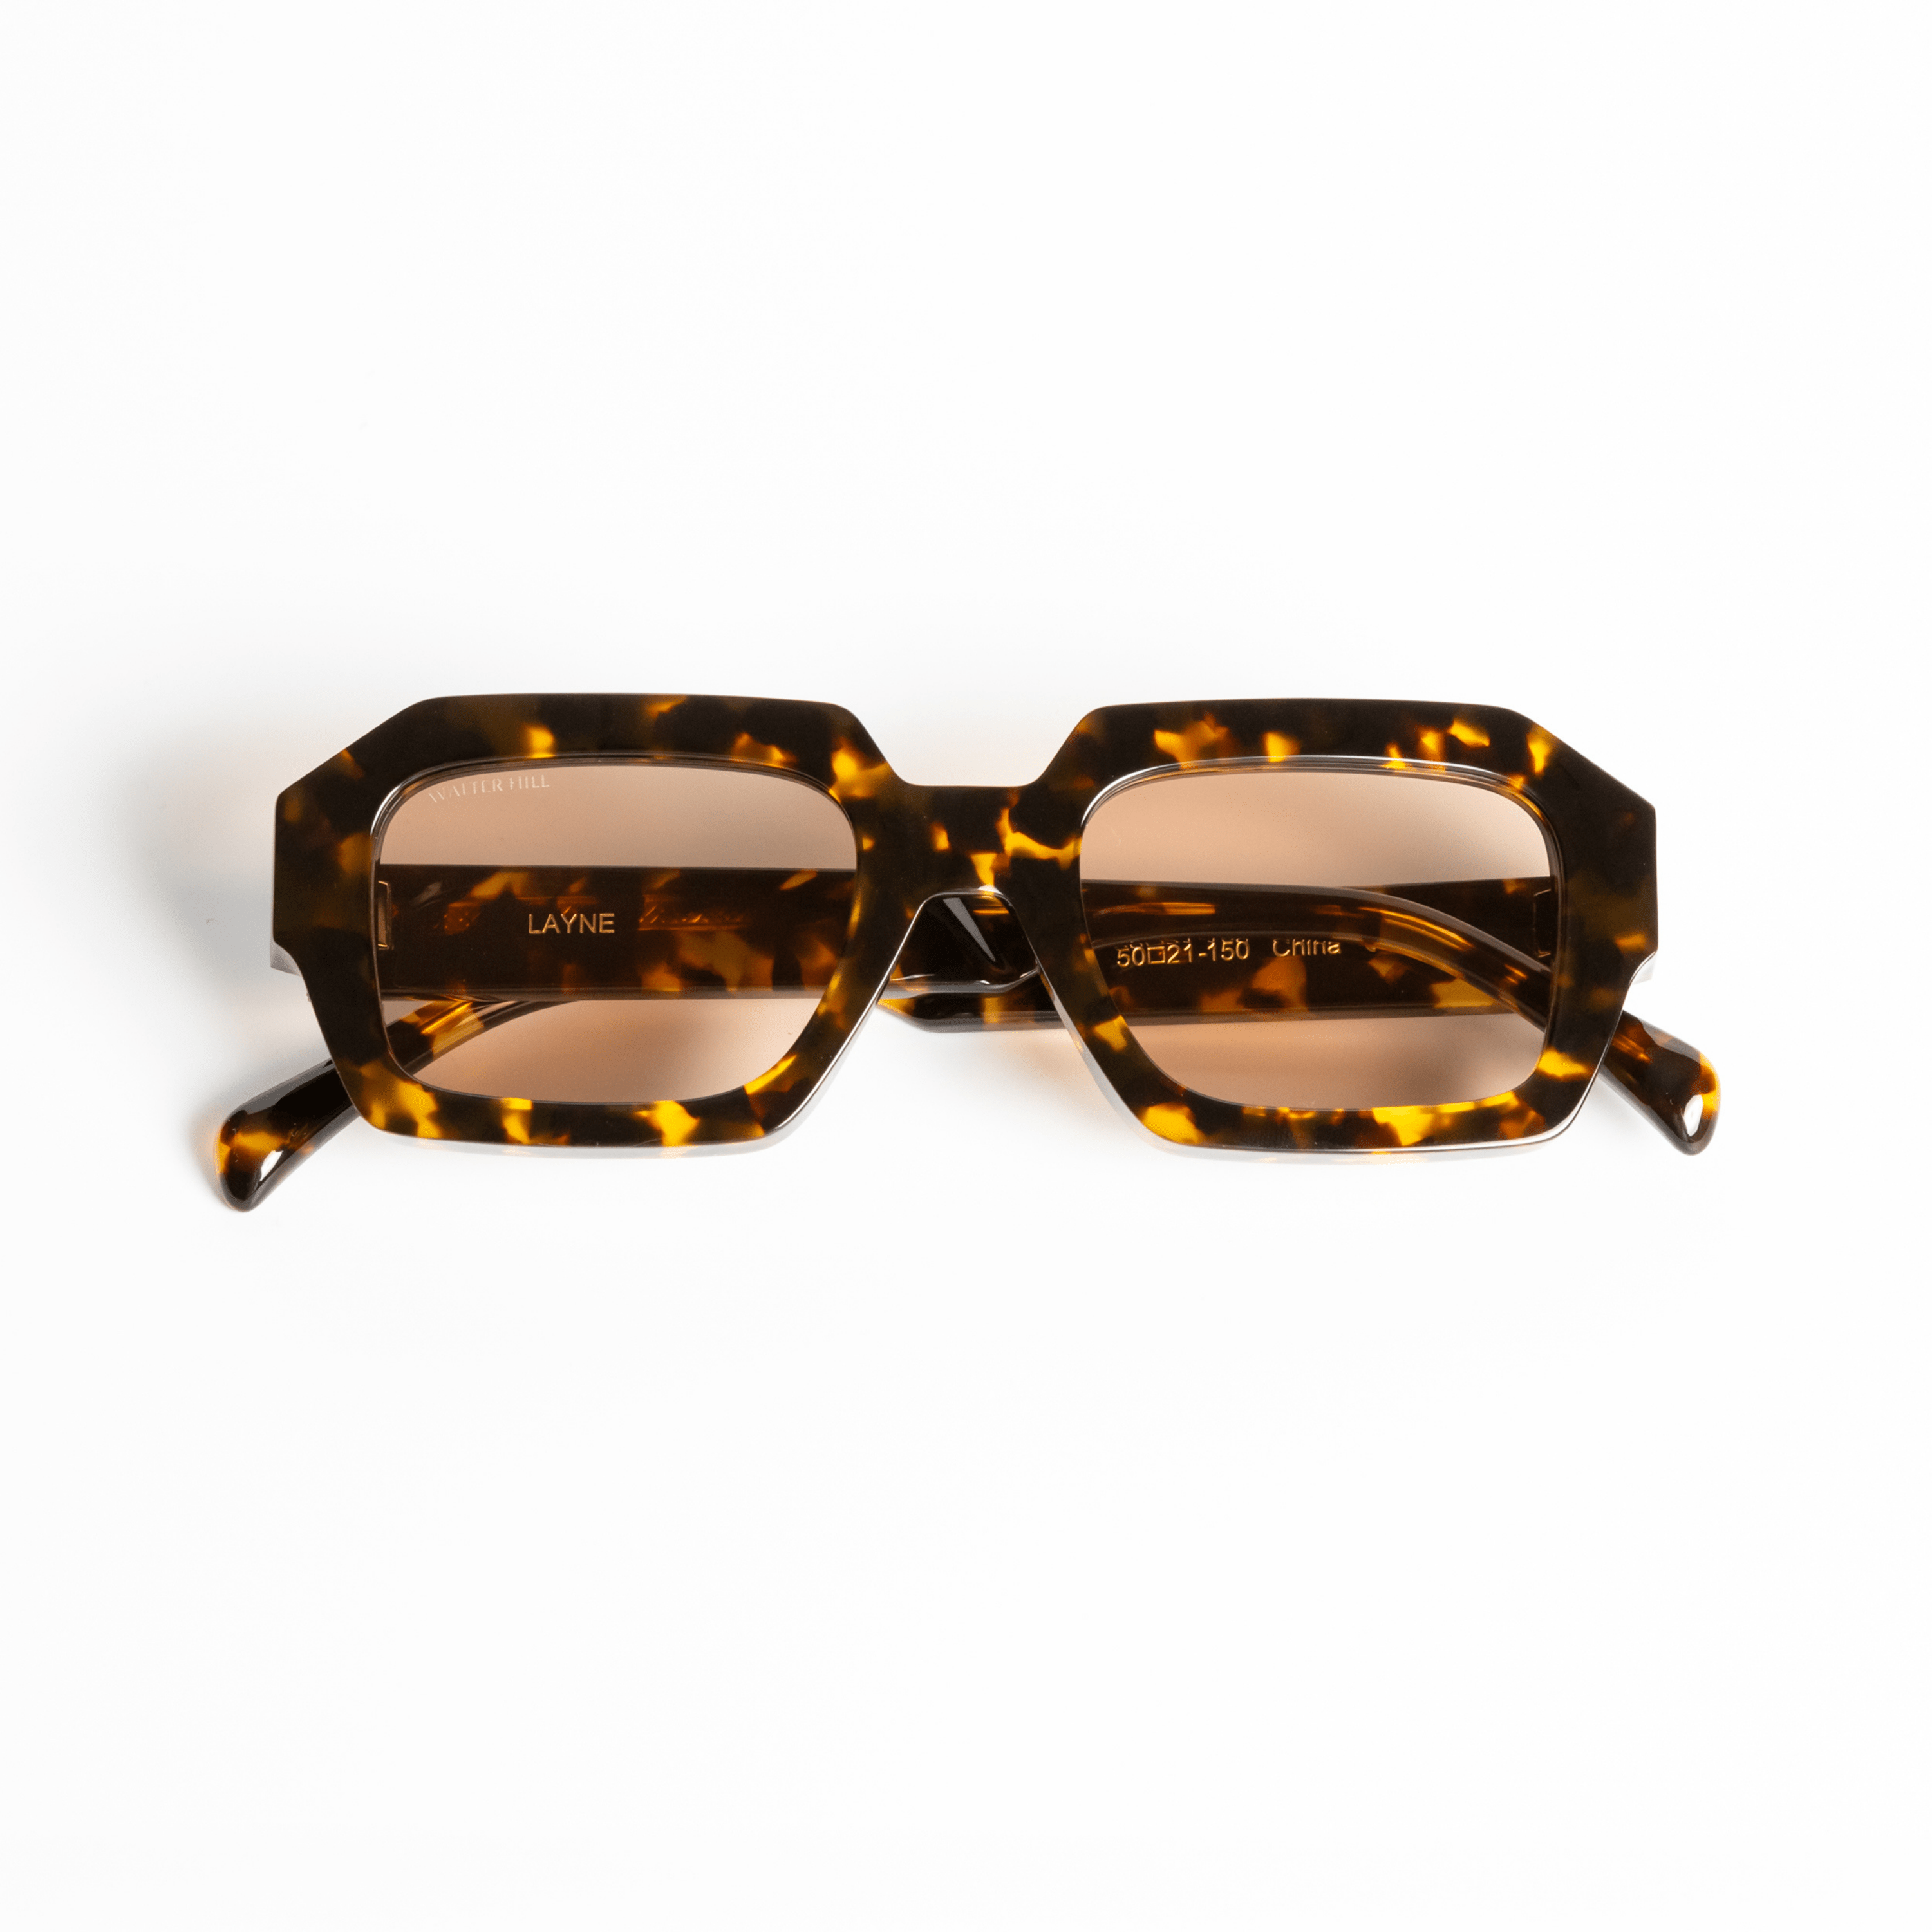 Walter Hill Sunglasses Tortoise / Standard / Polarized Cat.3 LAYNE - Tortoise